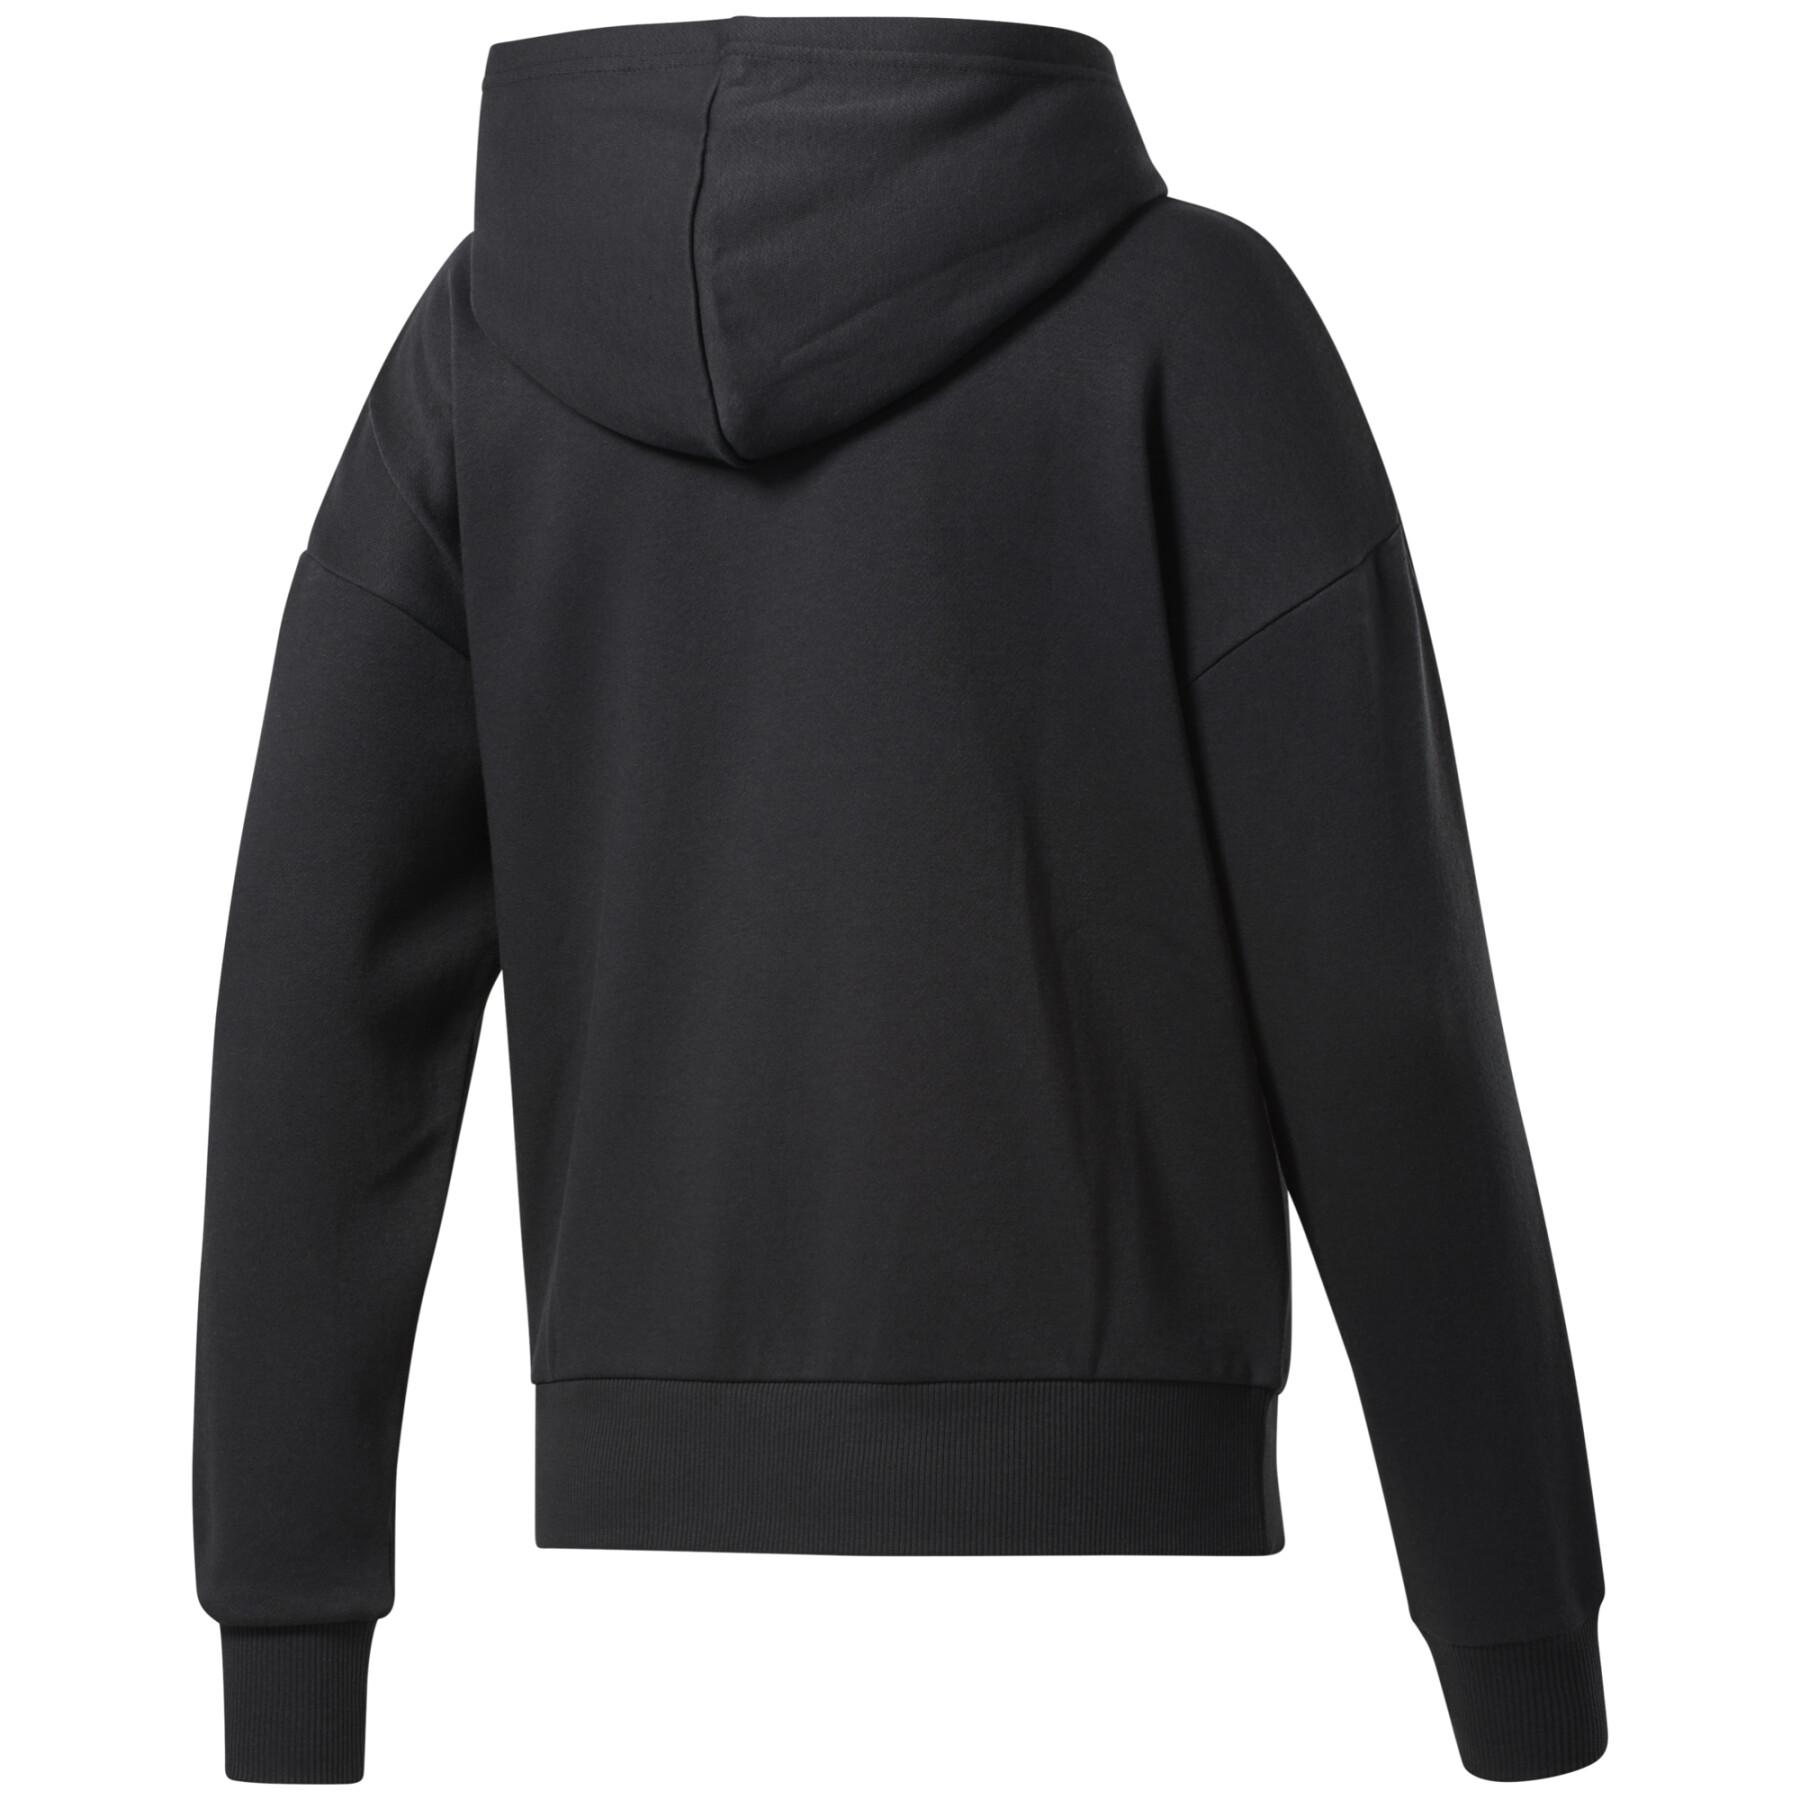 Women's hooded sweatshirt Reebok Piping Zip-Up